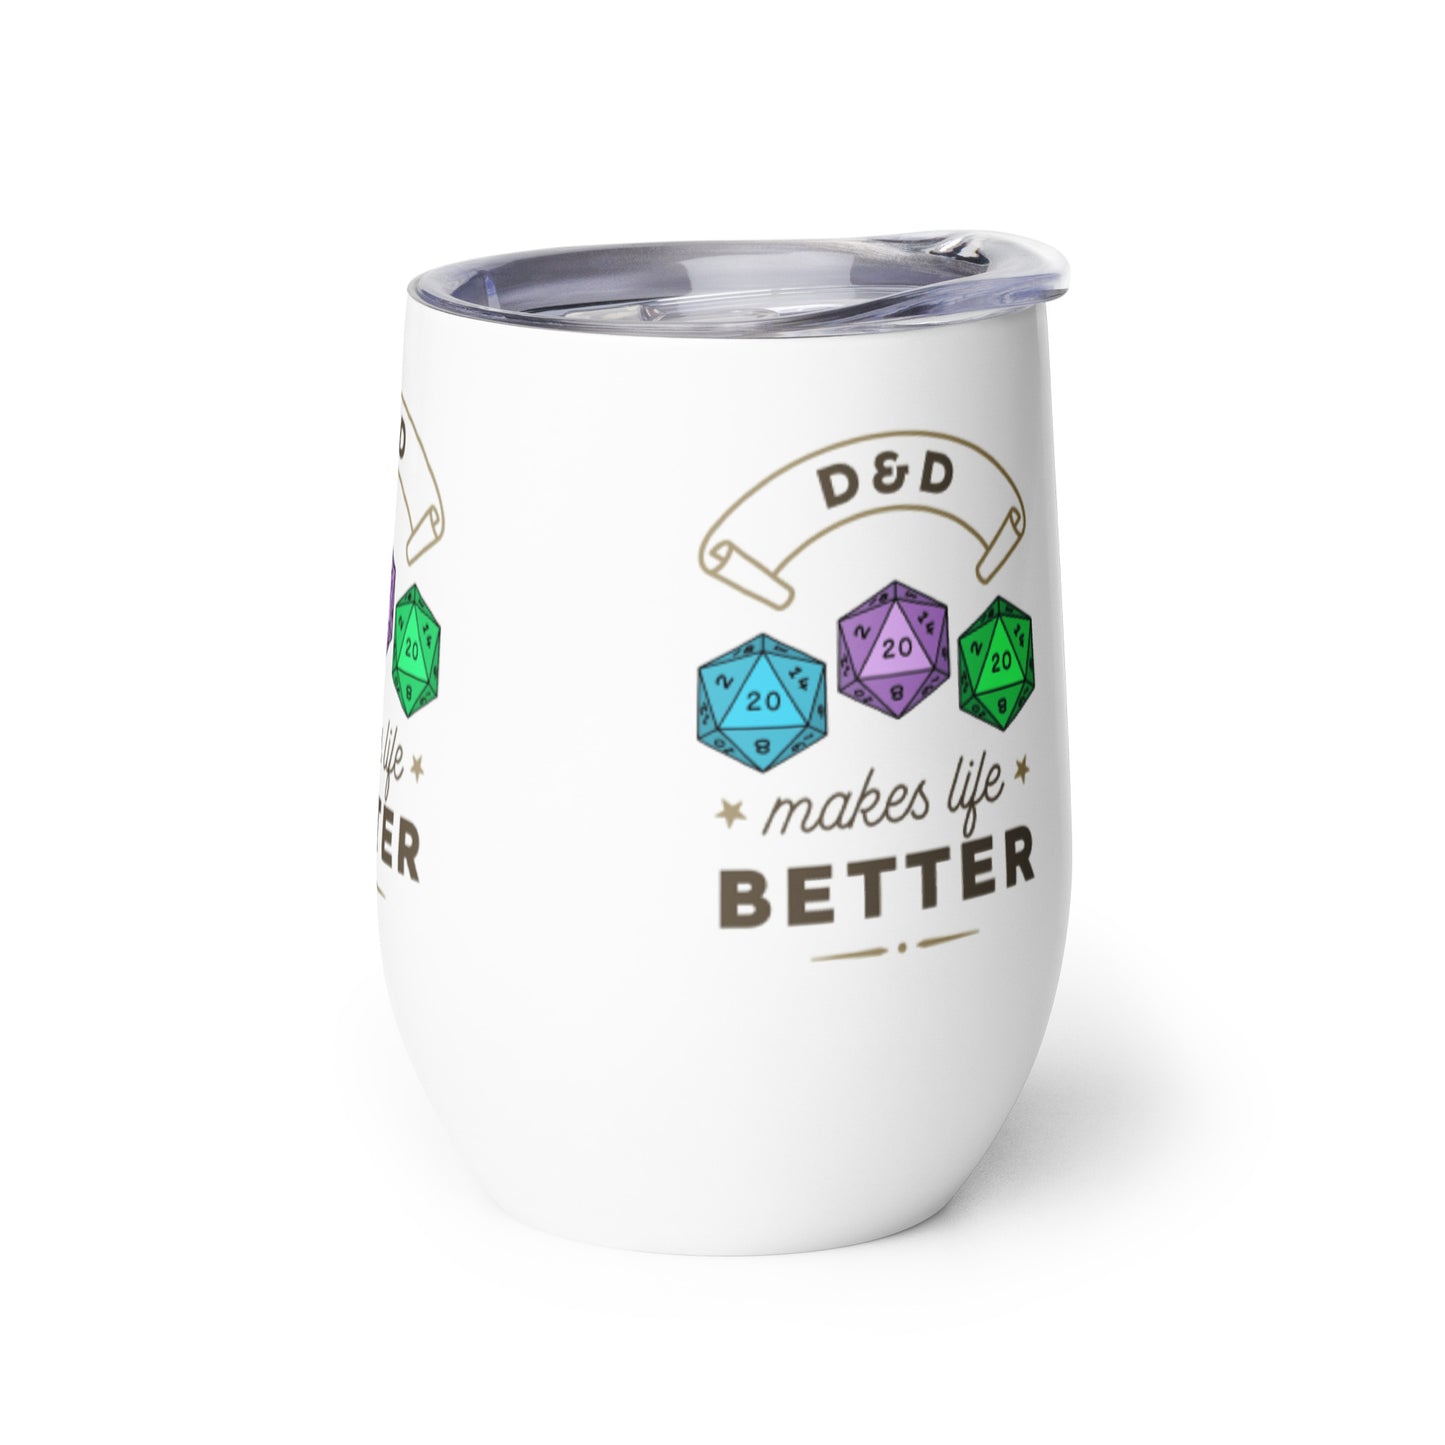 "D&D makes life better" Wine Tumbler